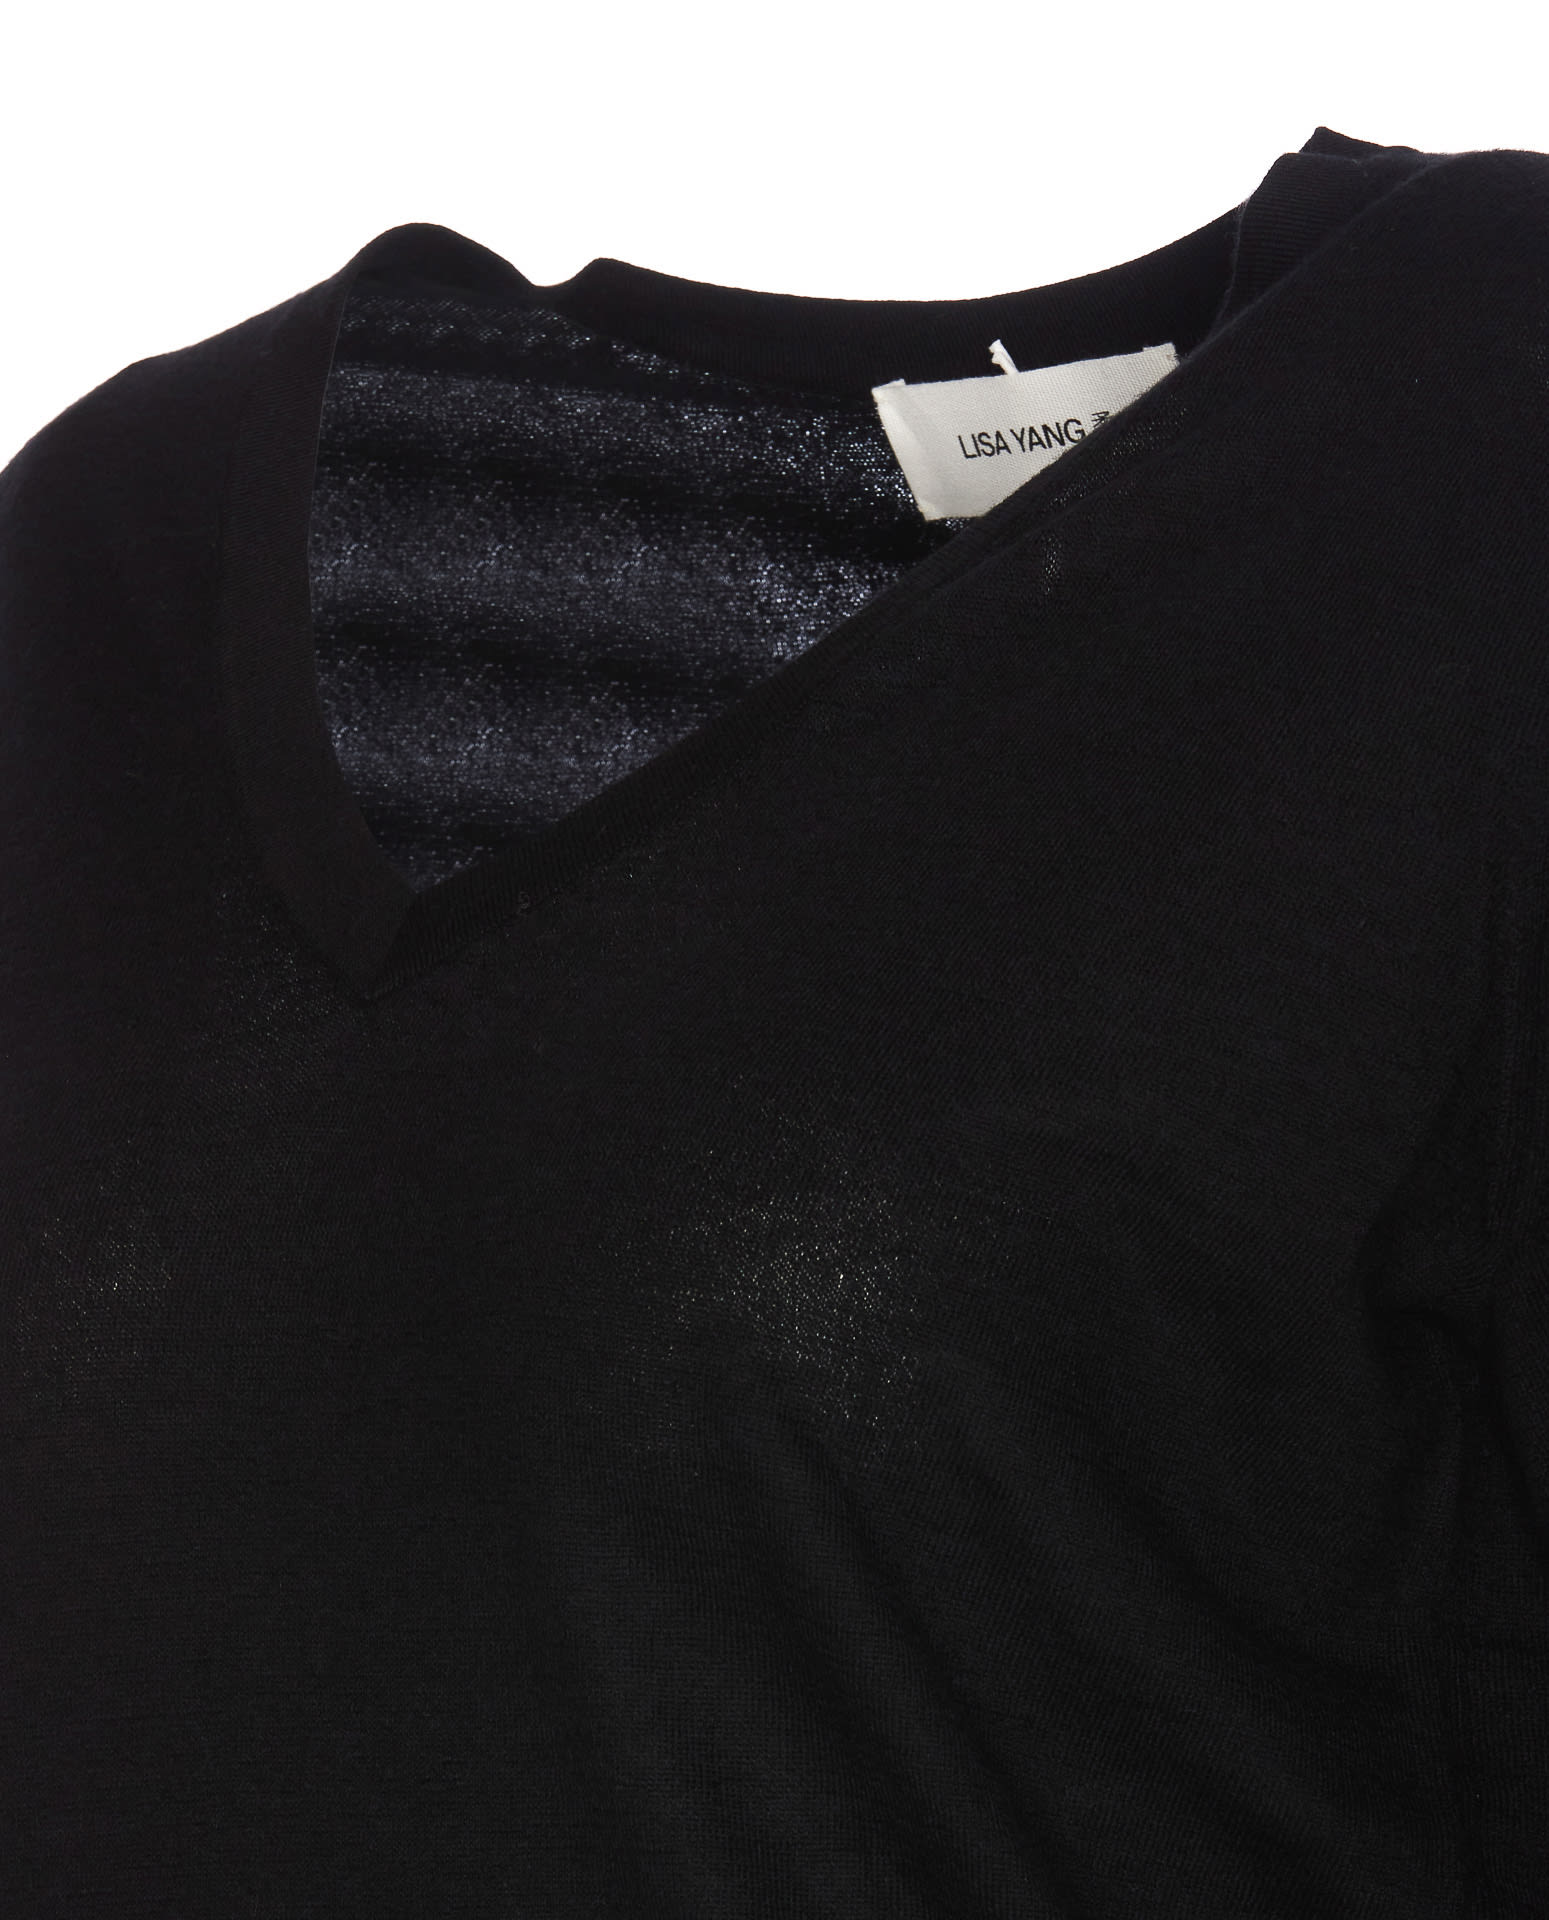 Shop Lisa Yang Jane Sweater In Black